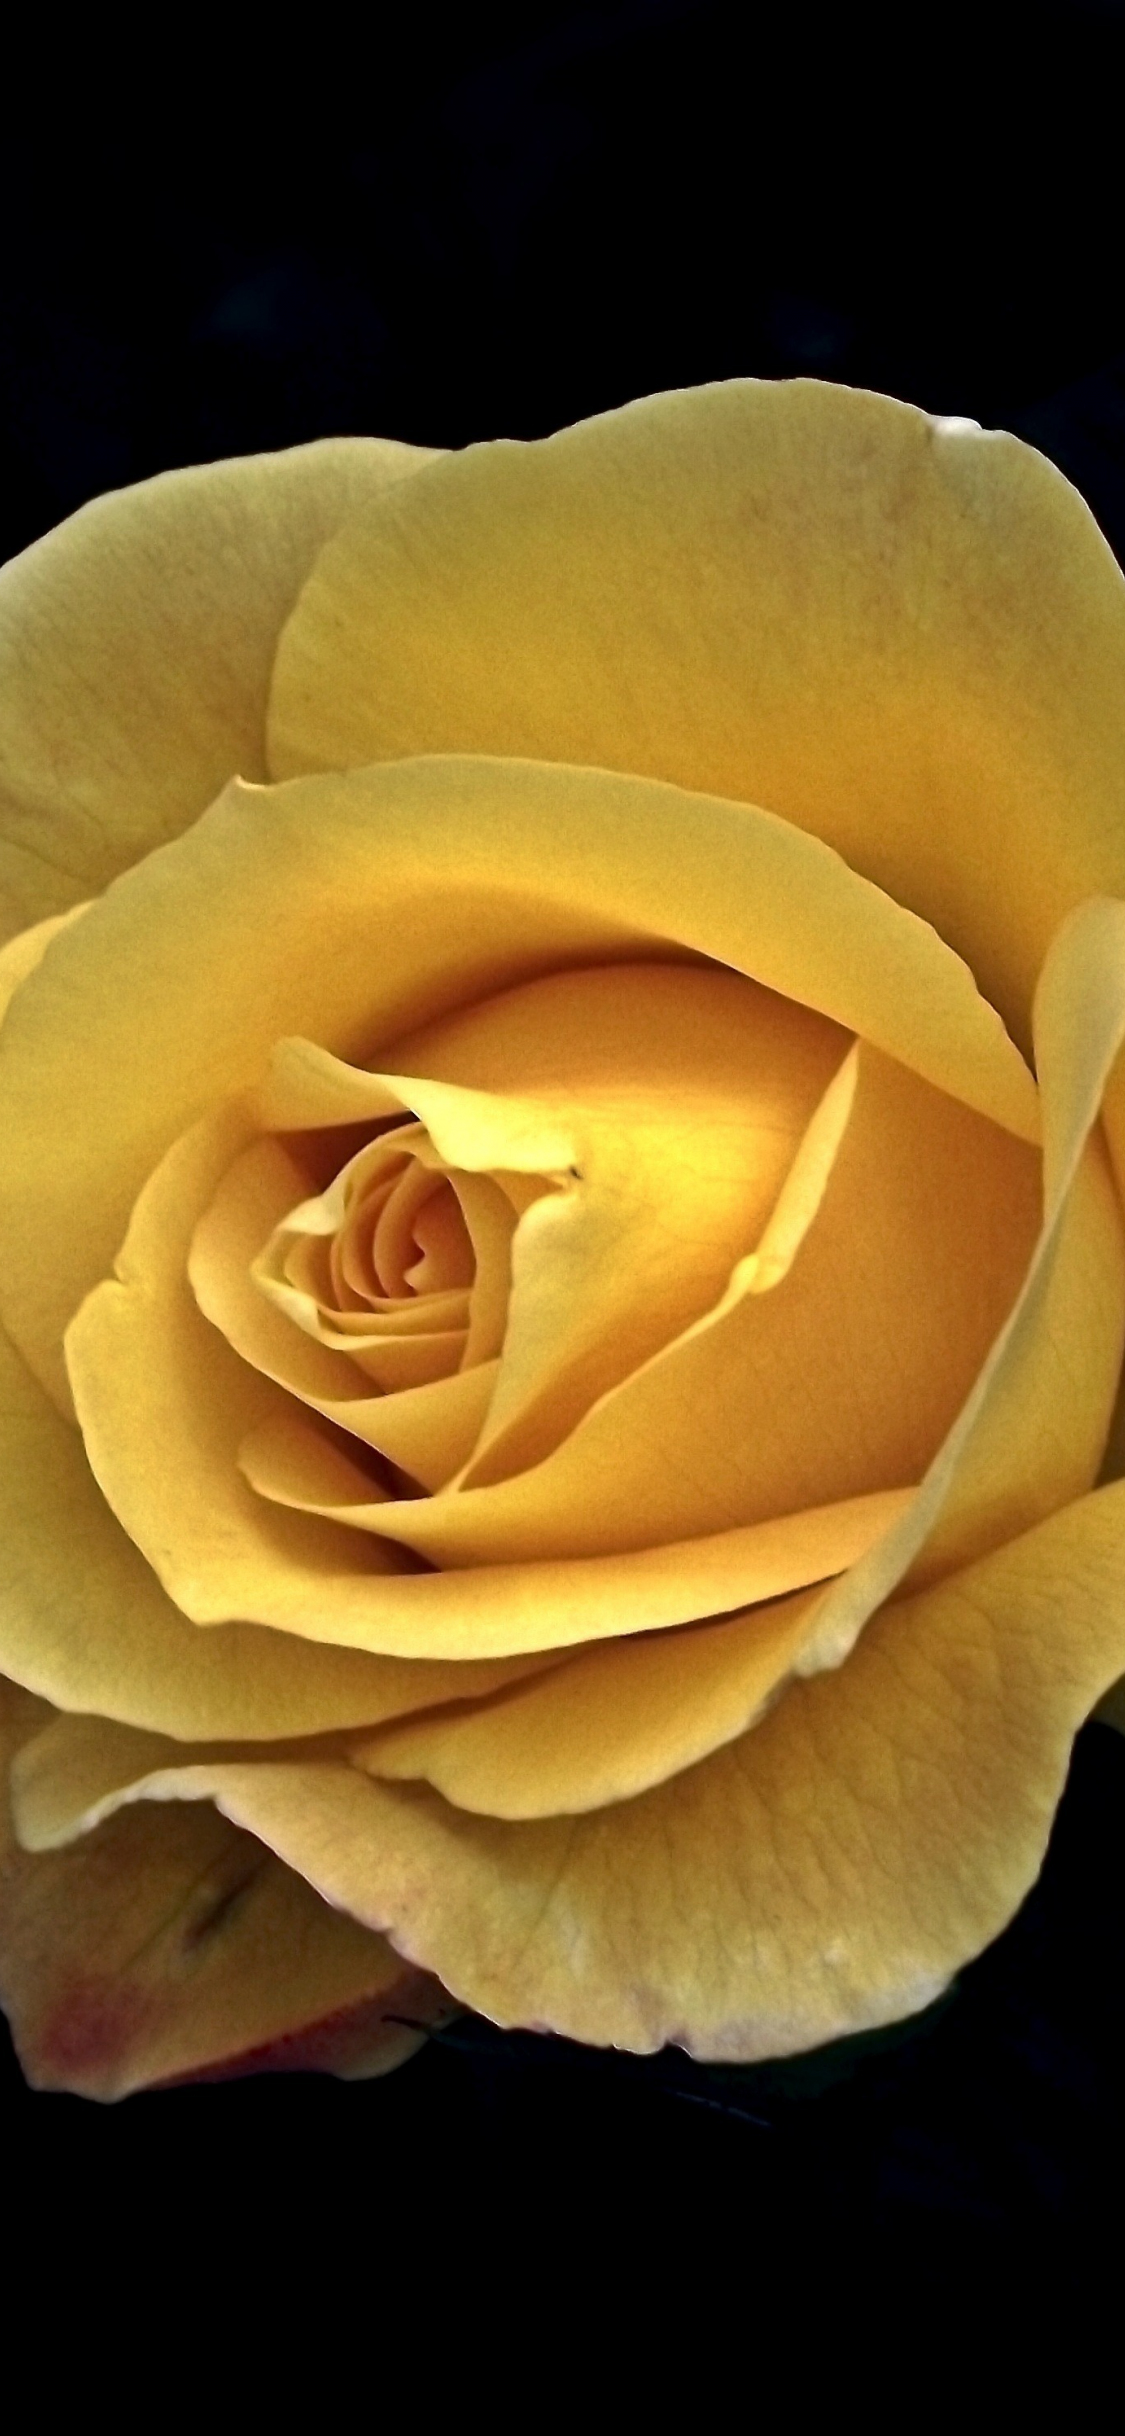 Download wallpaper 1125x2436 yellow rose, flower, portrait, iphone x,  1125x2436 hd background, 3563